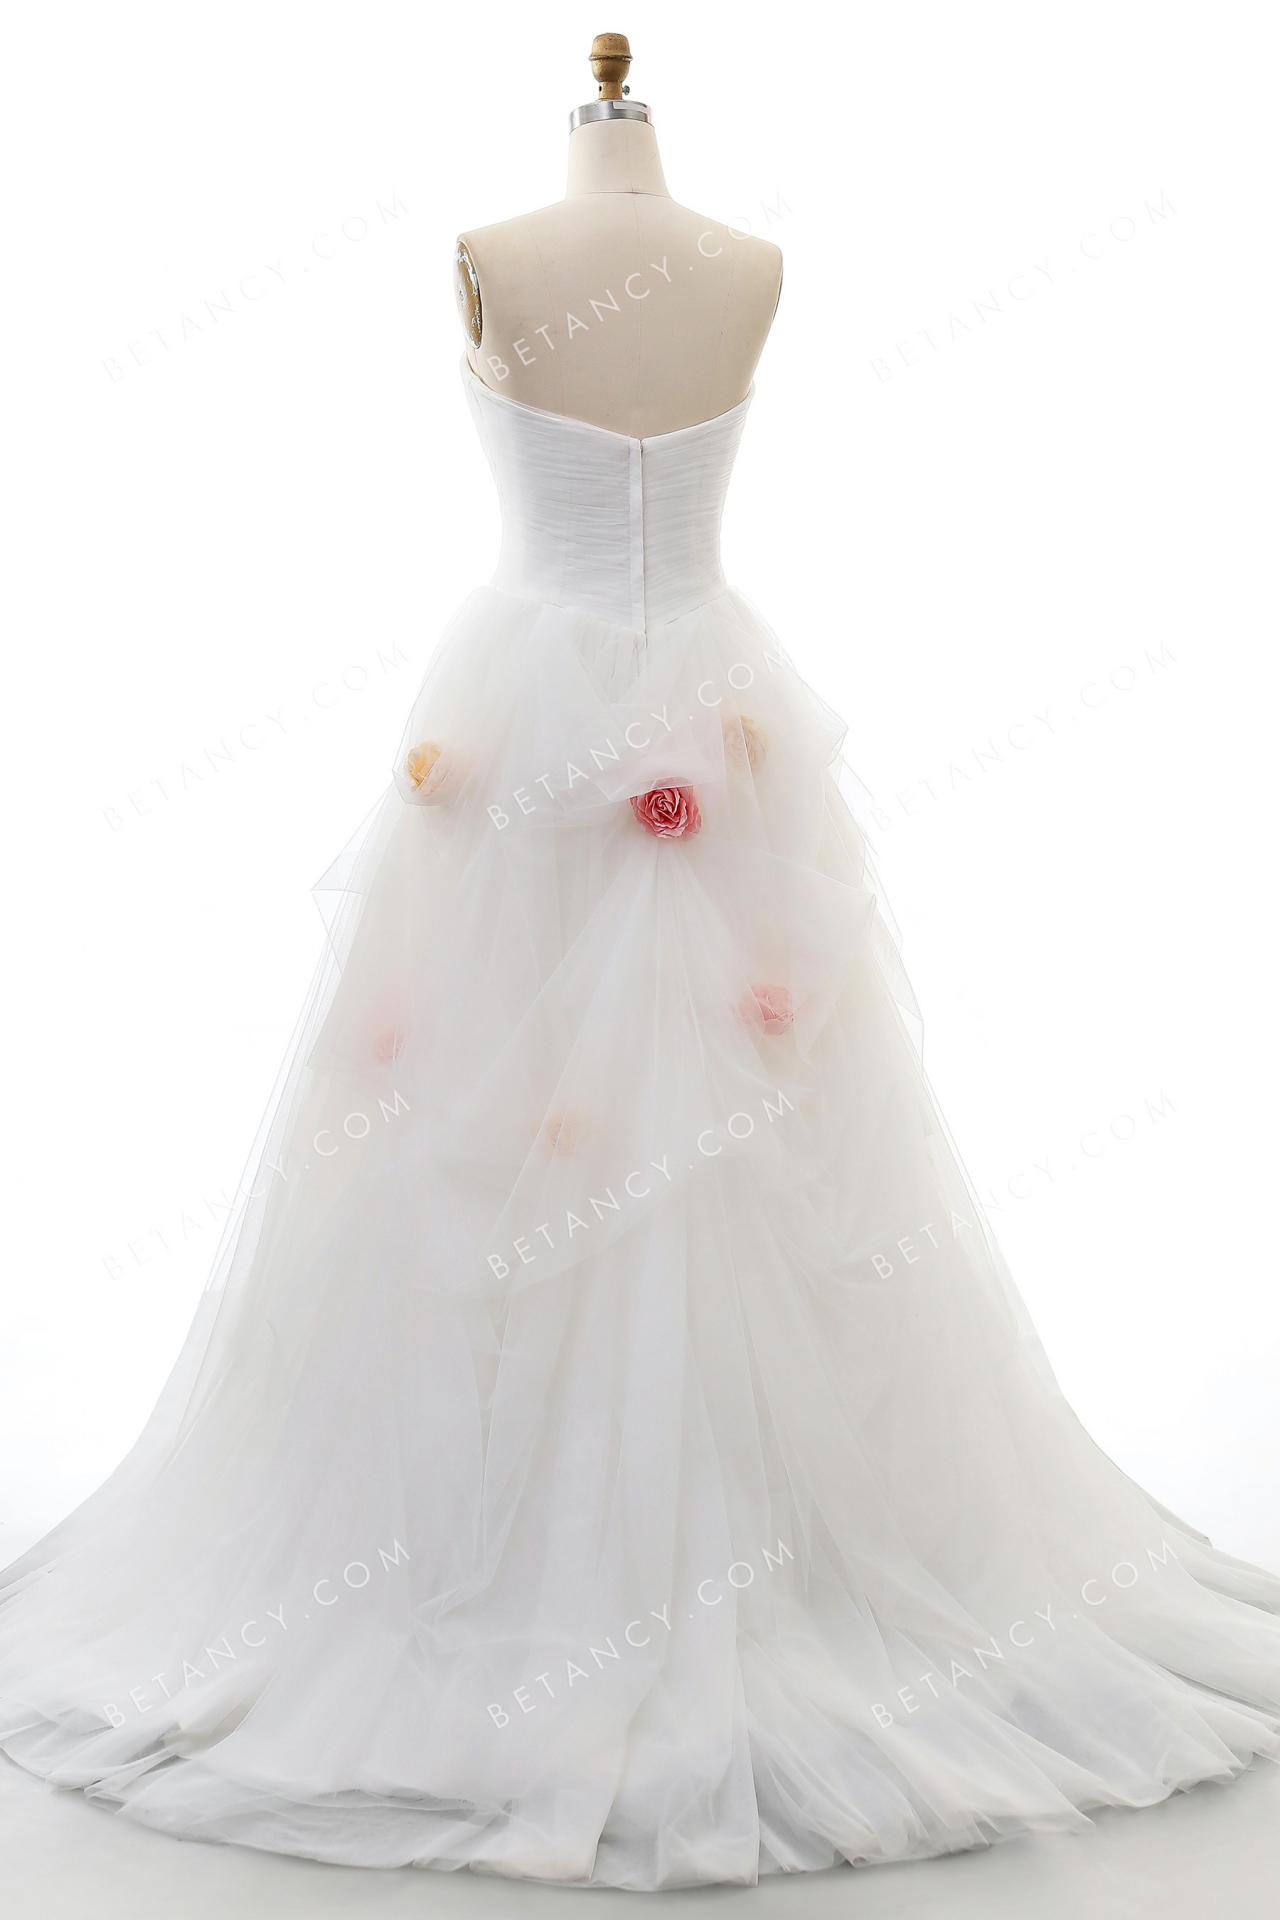 Basque waist princess tulle bridal ball gown 9